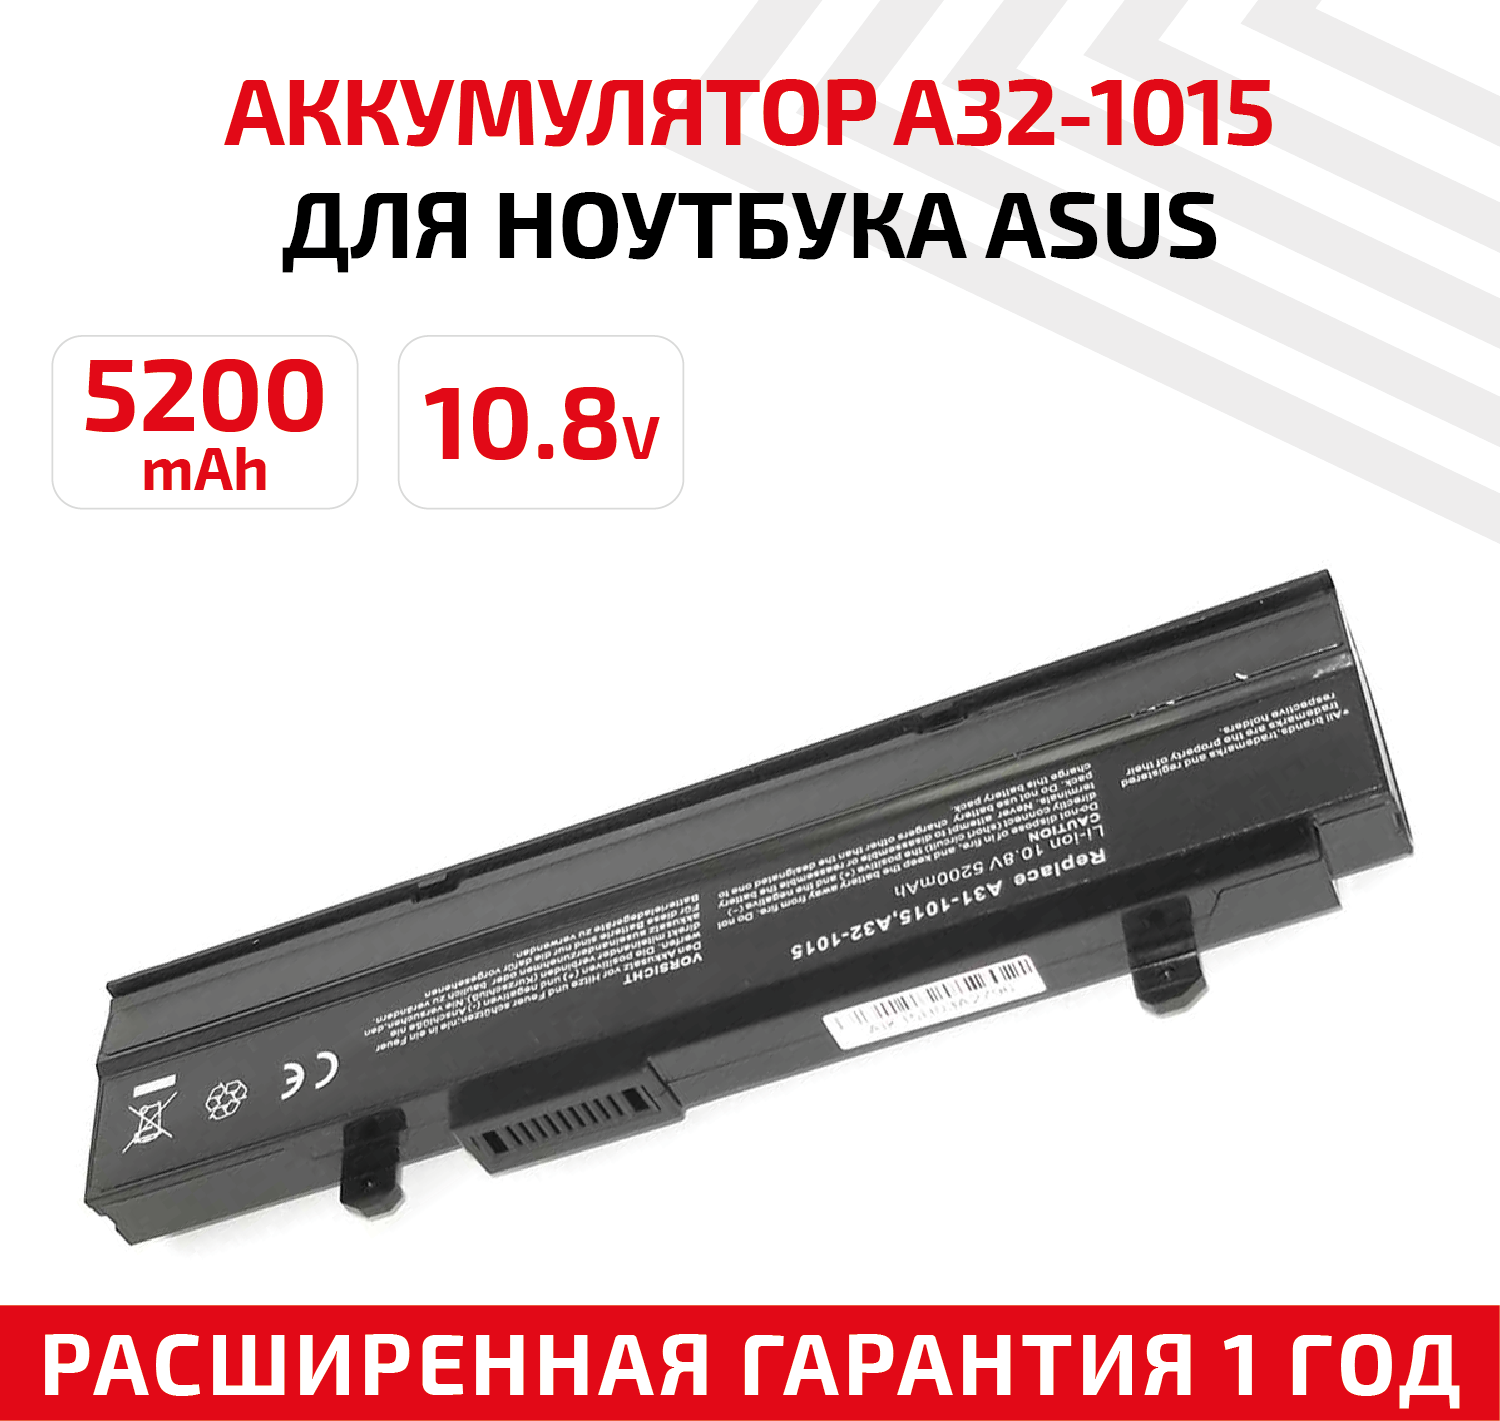 Аккумулятор (АКБ аккумуляторная батарея) A32-1015 для ноутбука Asus Eee PC 1015 10.8В 5200мАч черная